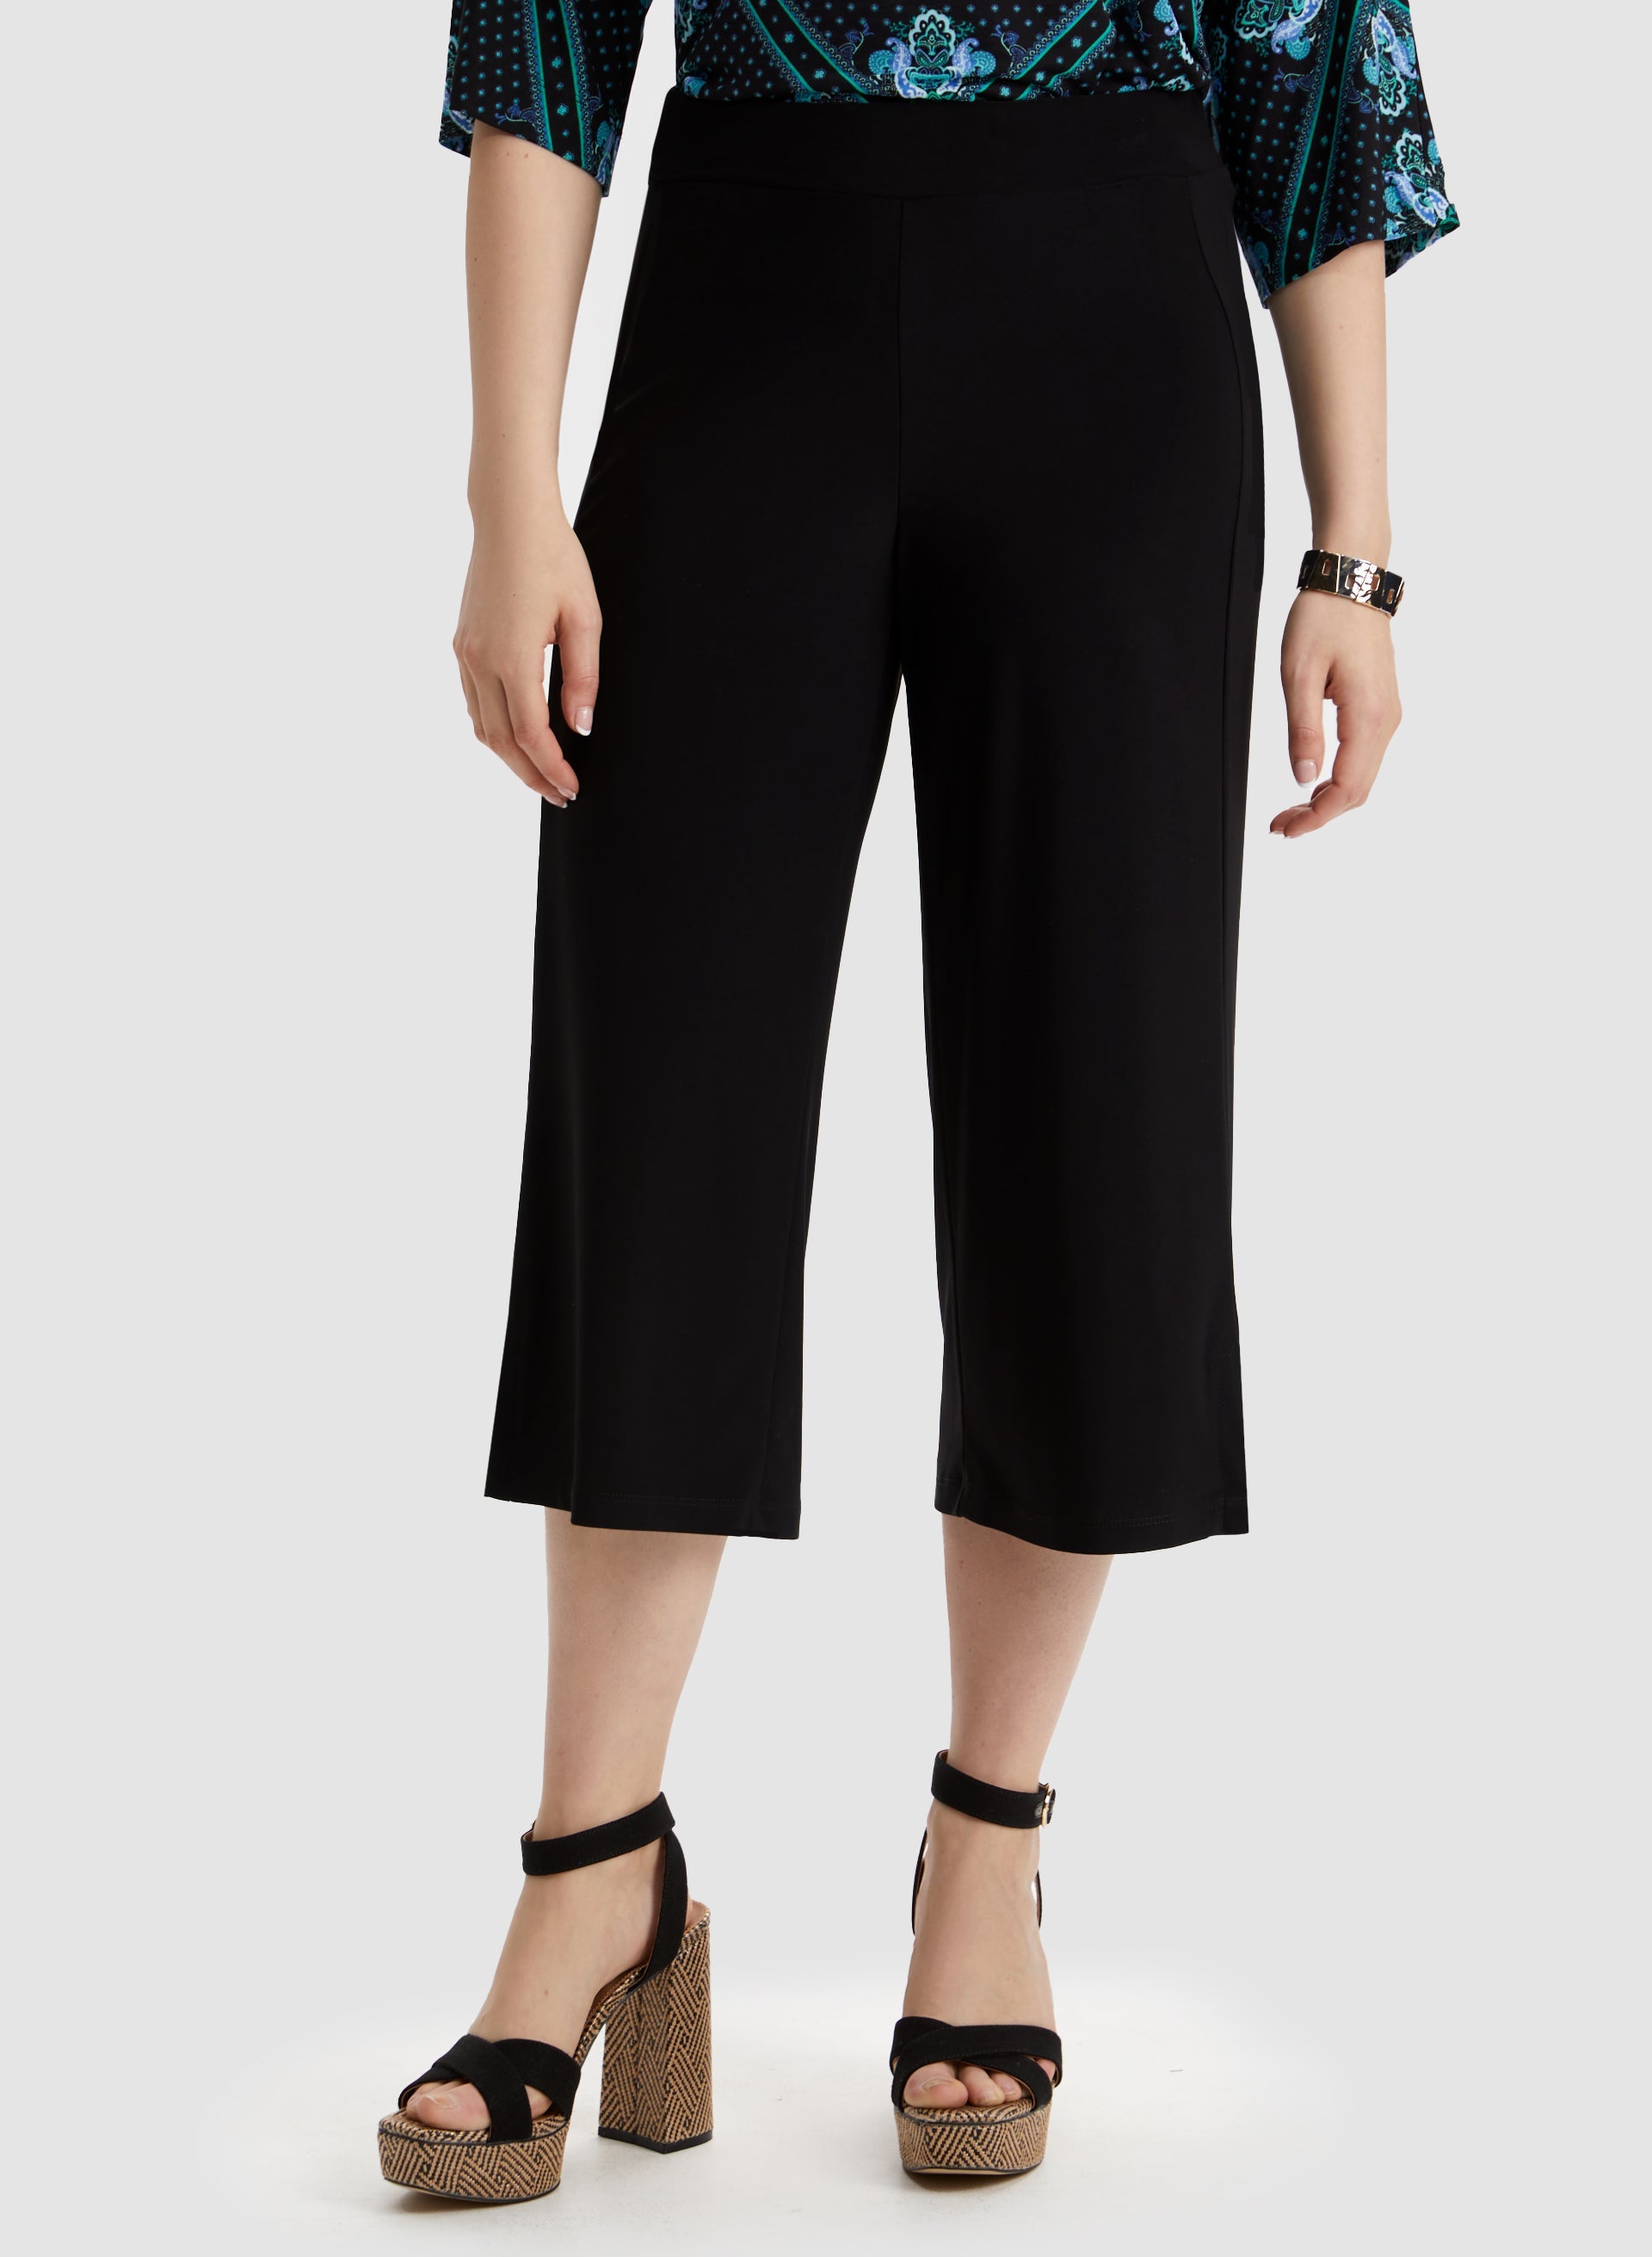 New York & Company Capri Pants Cropped Trouser Stretch Denim NWT